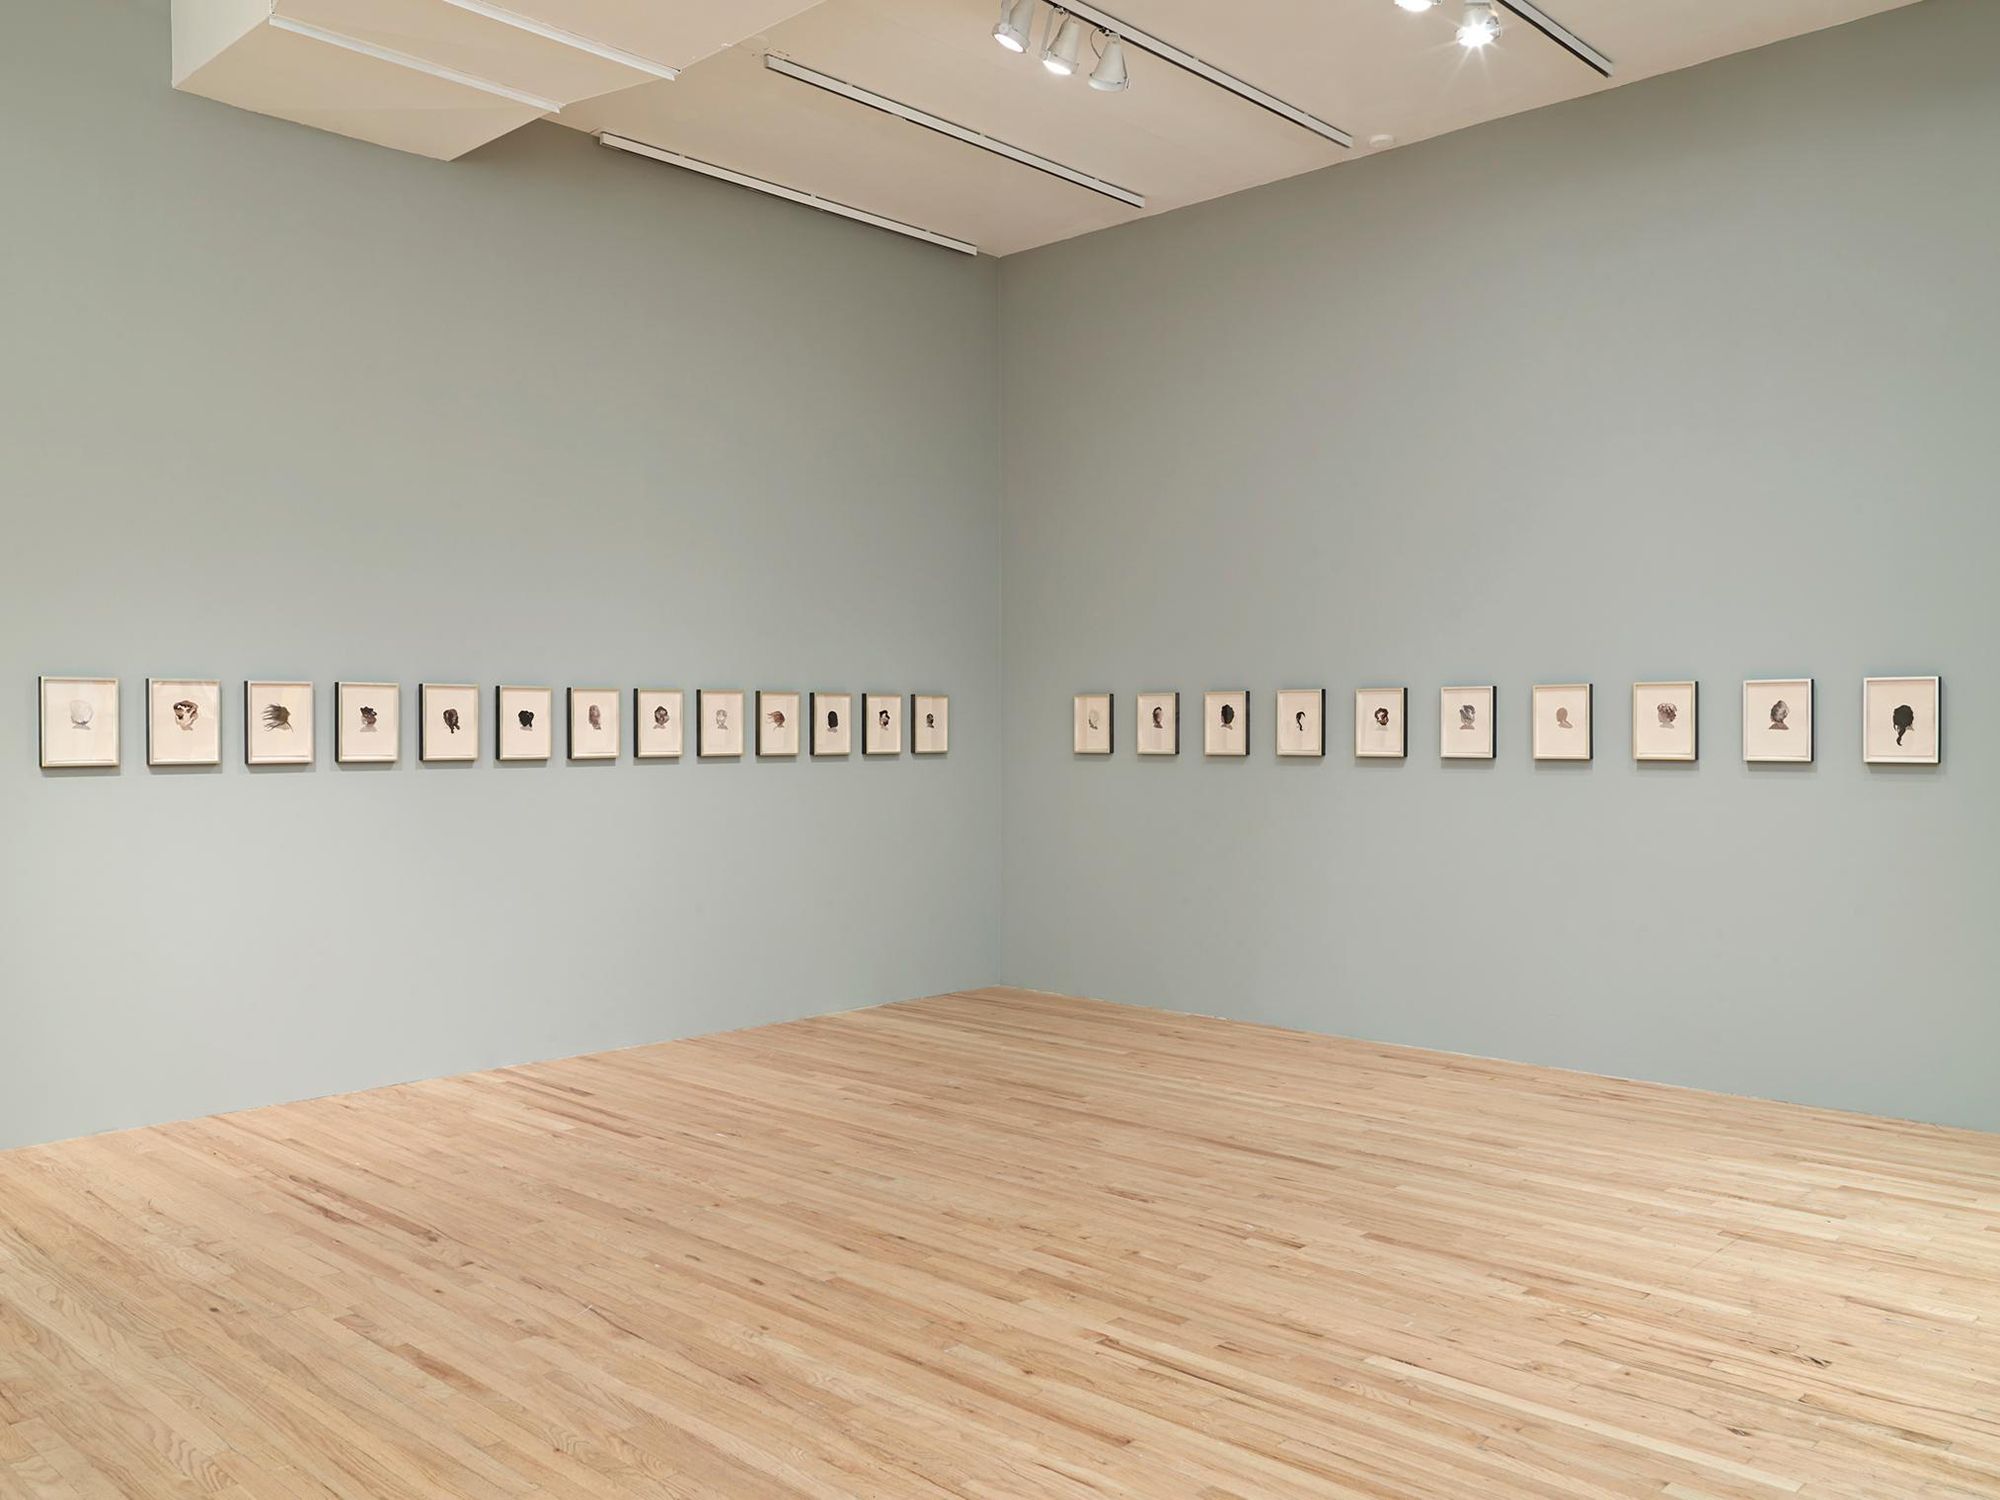  "Lorna Simpson: Works on Paper", Aspen Art Museum, Aspen, CO 2013